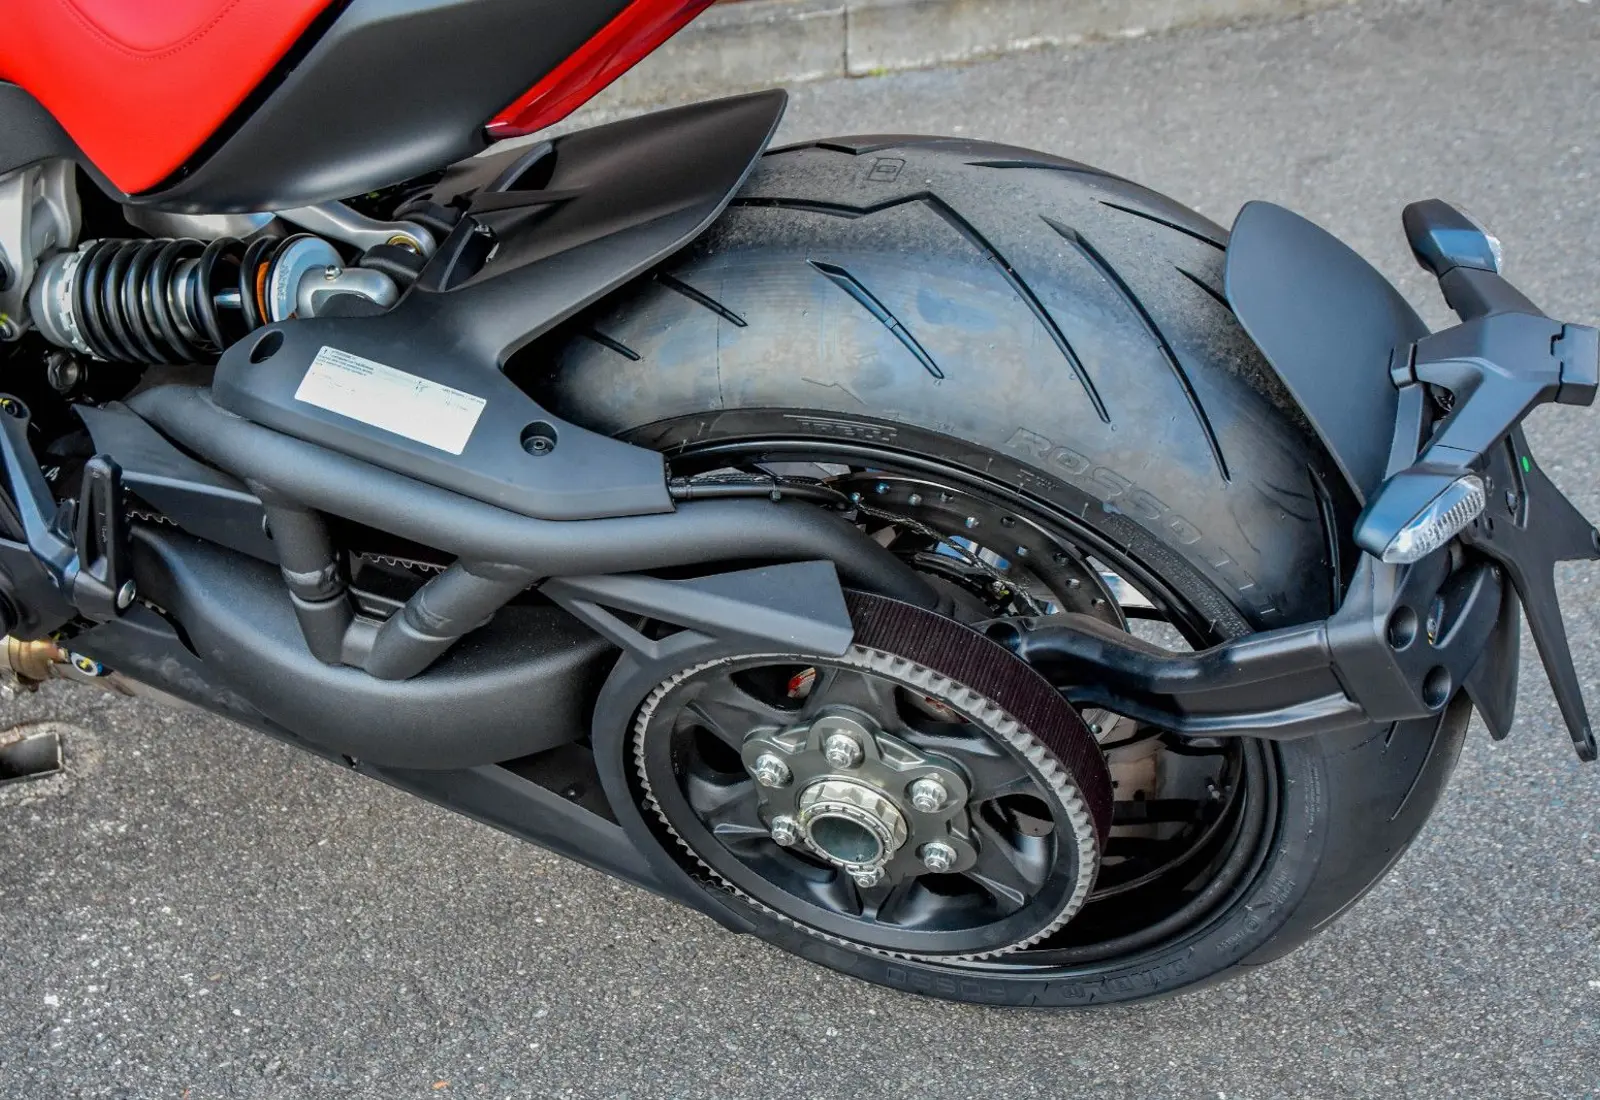 Ducati X-Diavel Nera * POLTRONA FRAU * 1 OF 500 * LIMITED ED - 42261